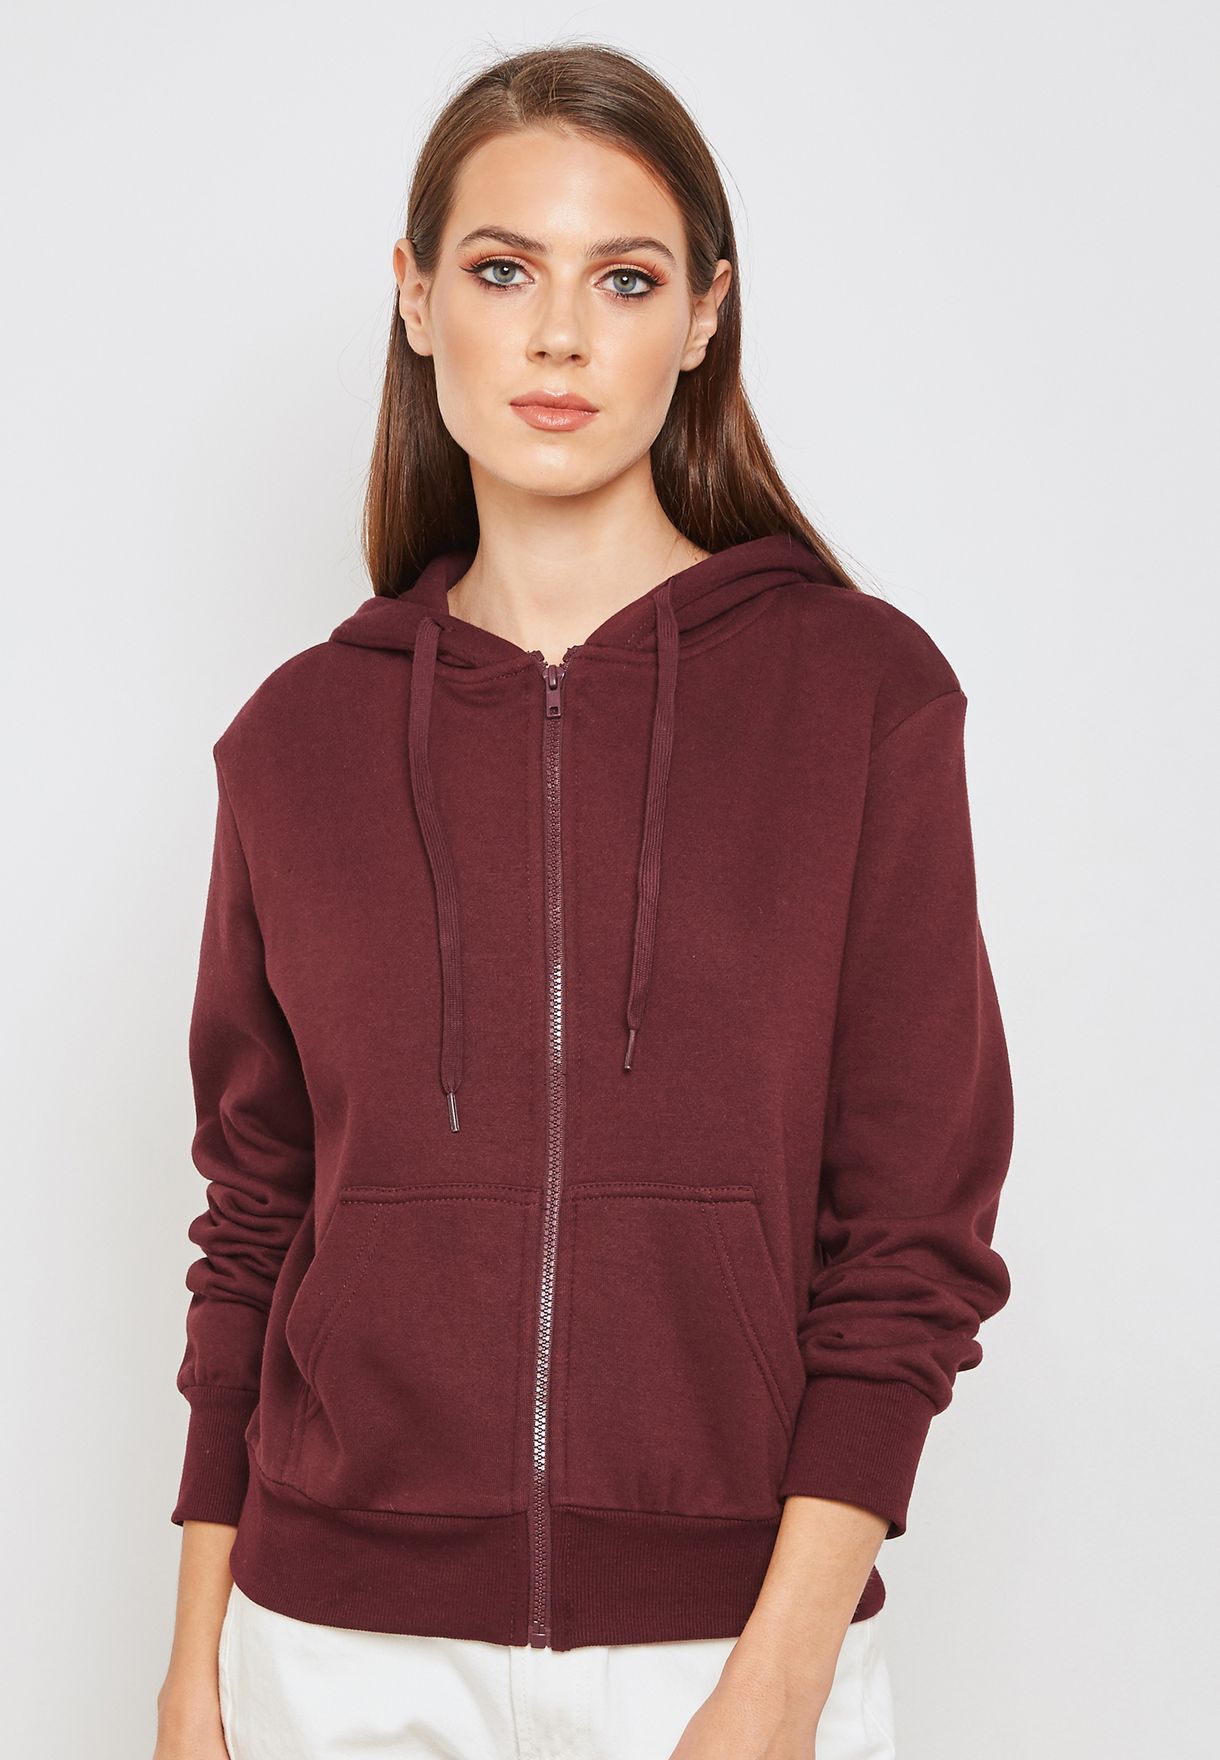 burgundy zip hoodie women's